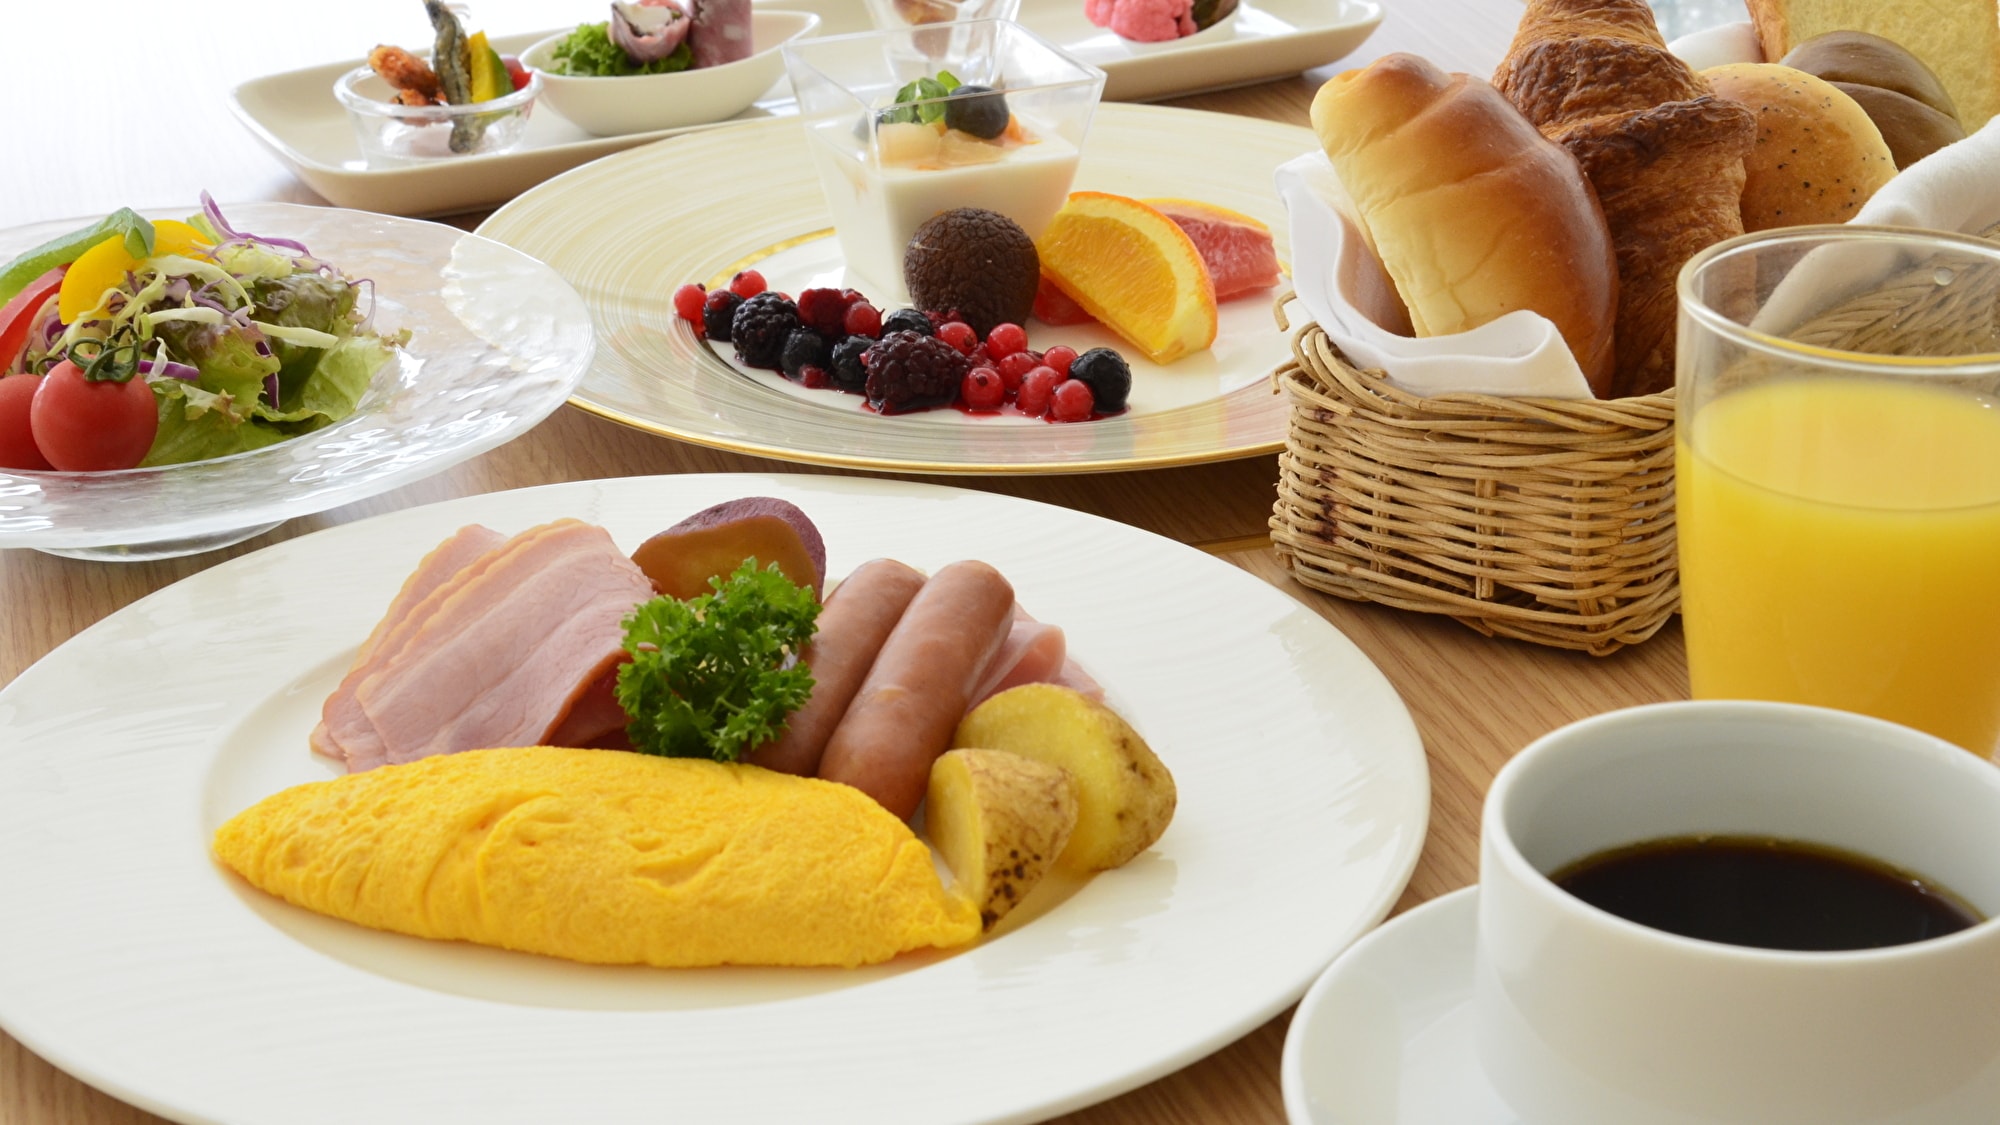 [Restoran Dreamland] Sebanyak yang Anda suka makanan lezat! Gambar sarapan prasmanan Jepang dan Barat